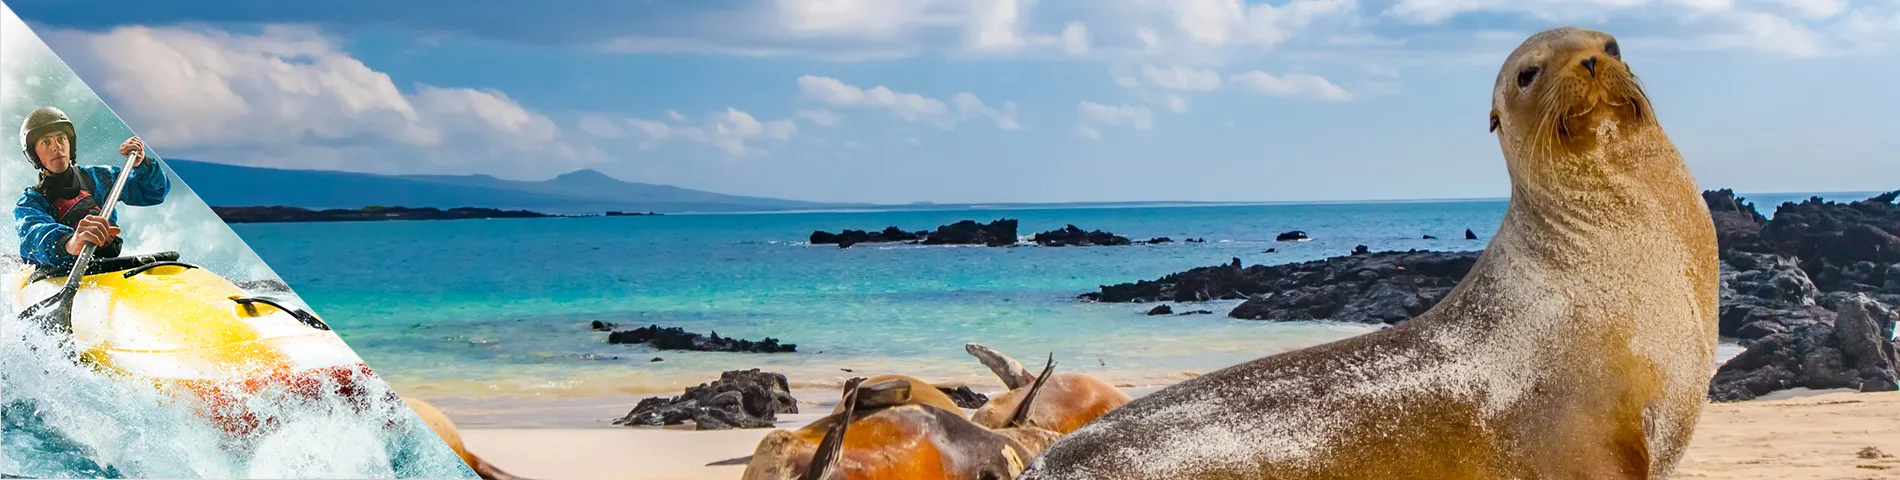 Galapagos-saaret - Espanja & seikkailu-urheilu